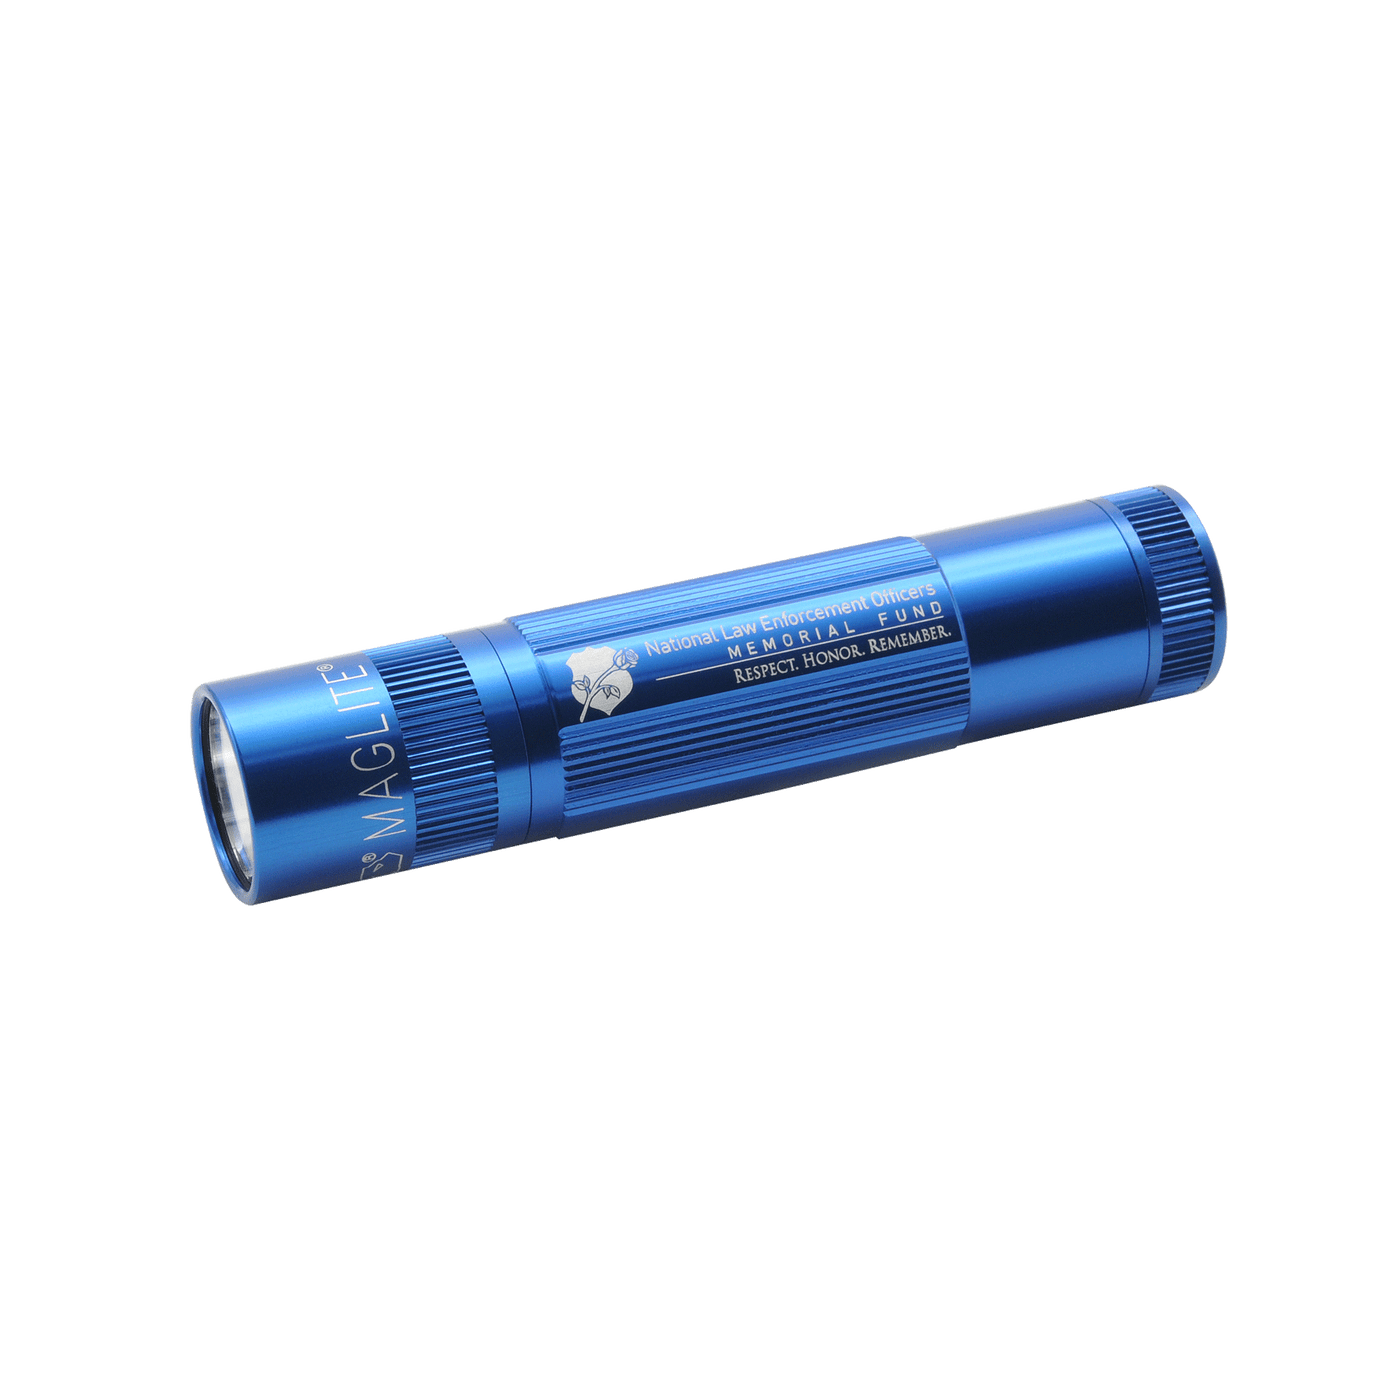 Maglite XL50 LED Pocket Flashlight with National Law Enforcement Memorial  laser engraving 